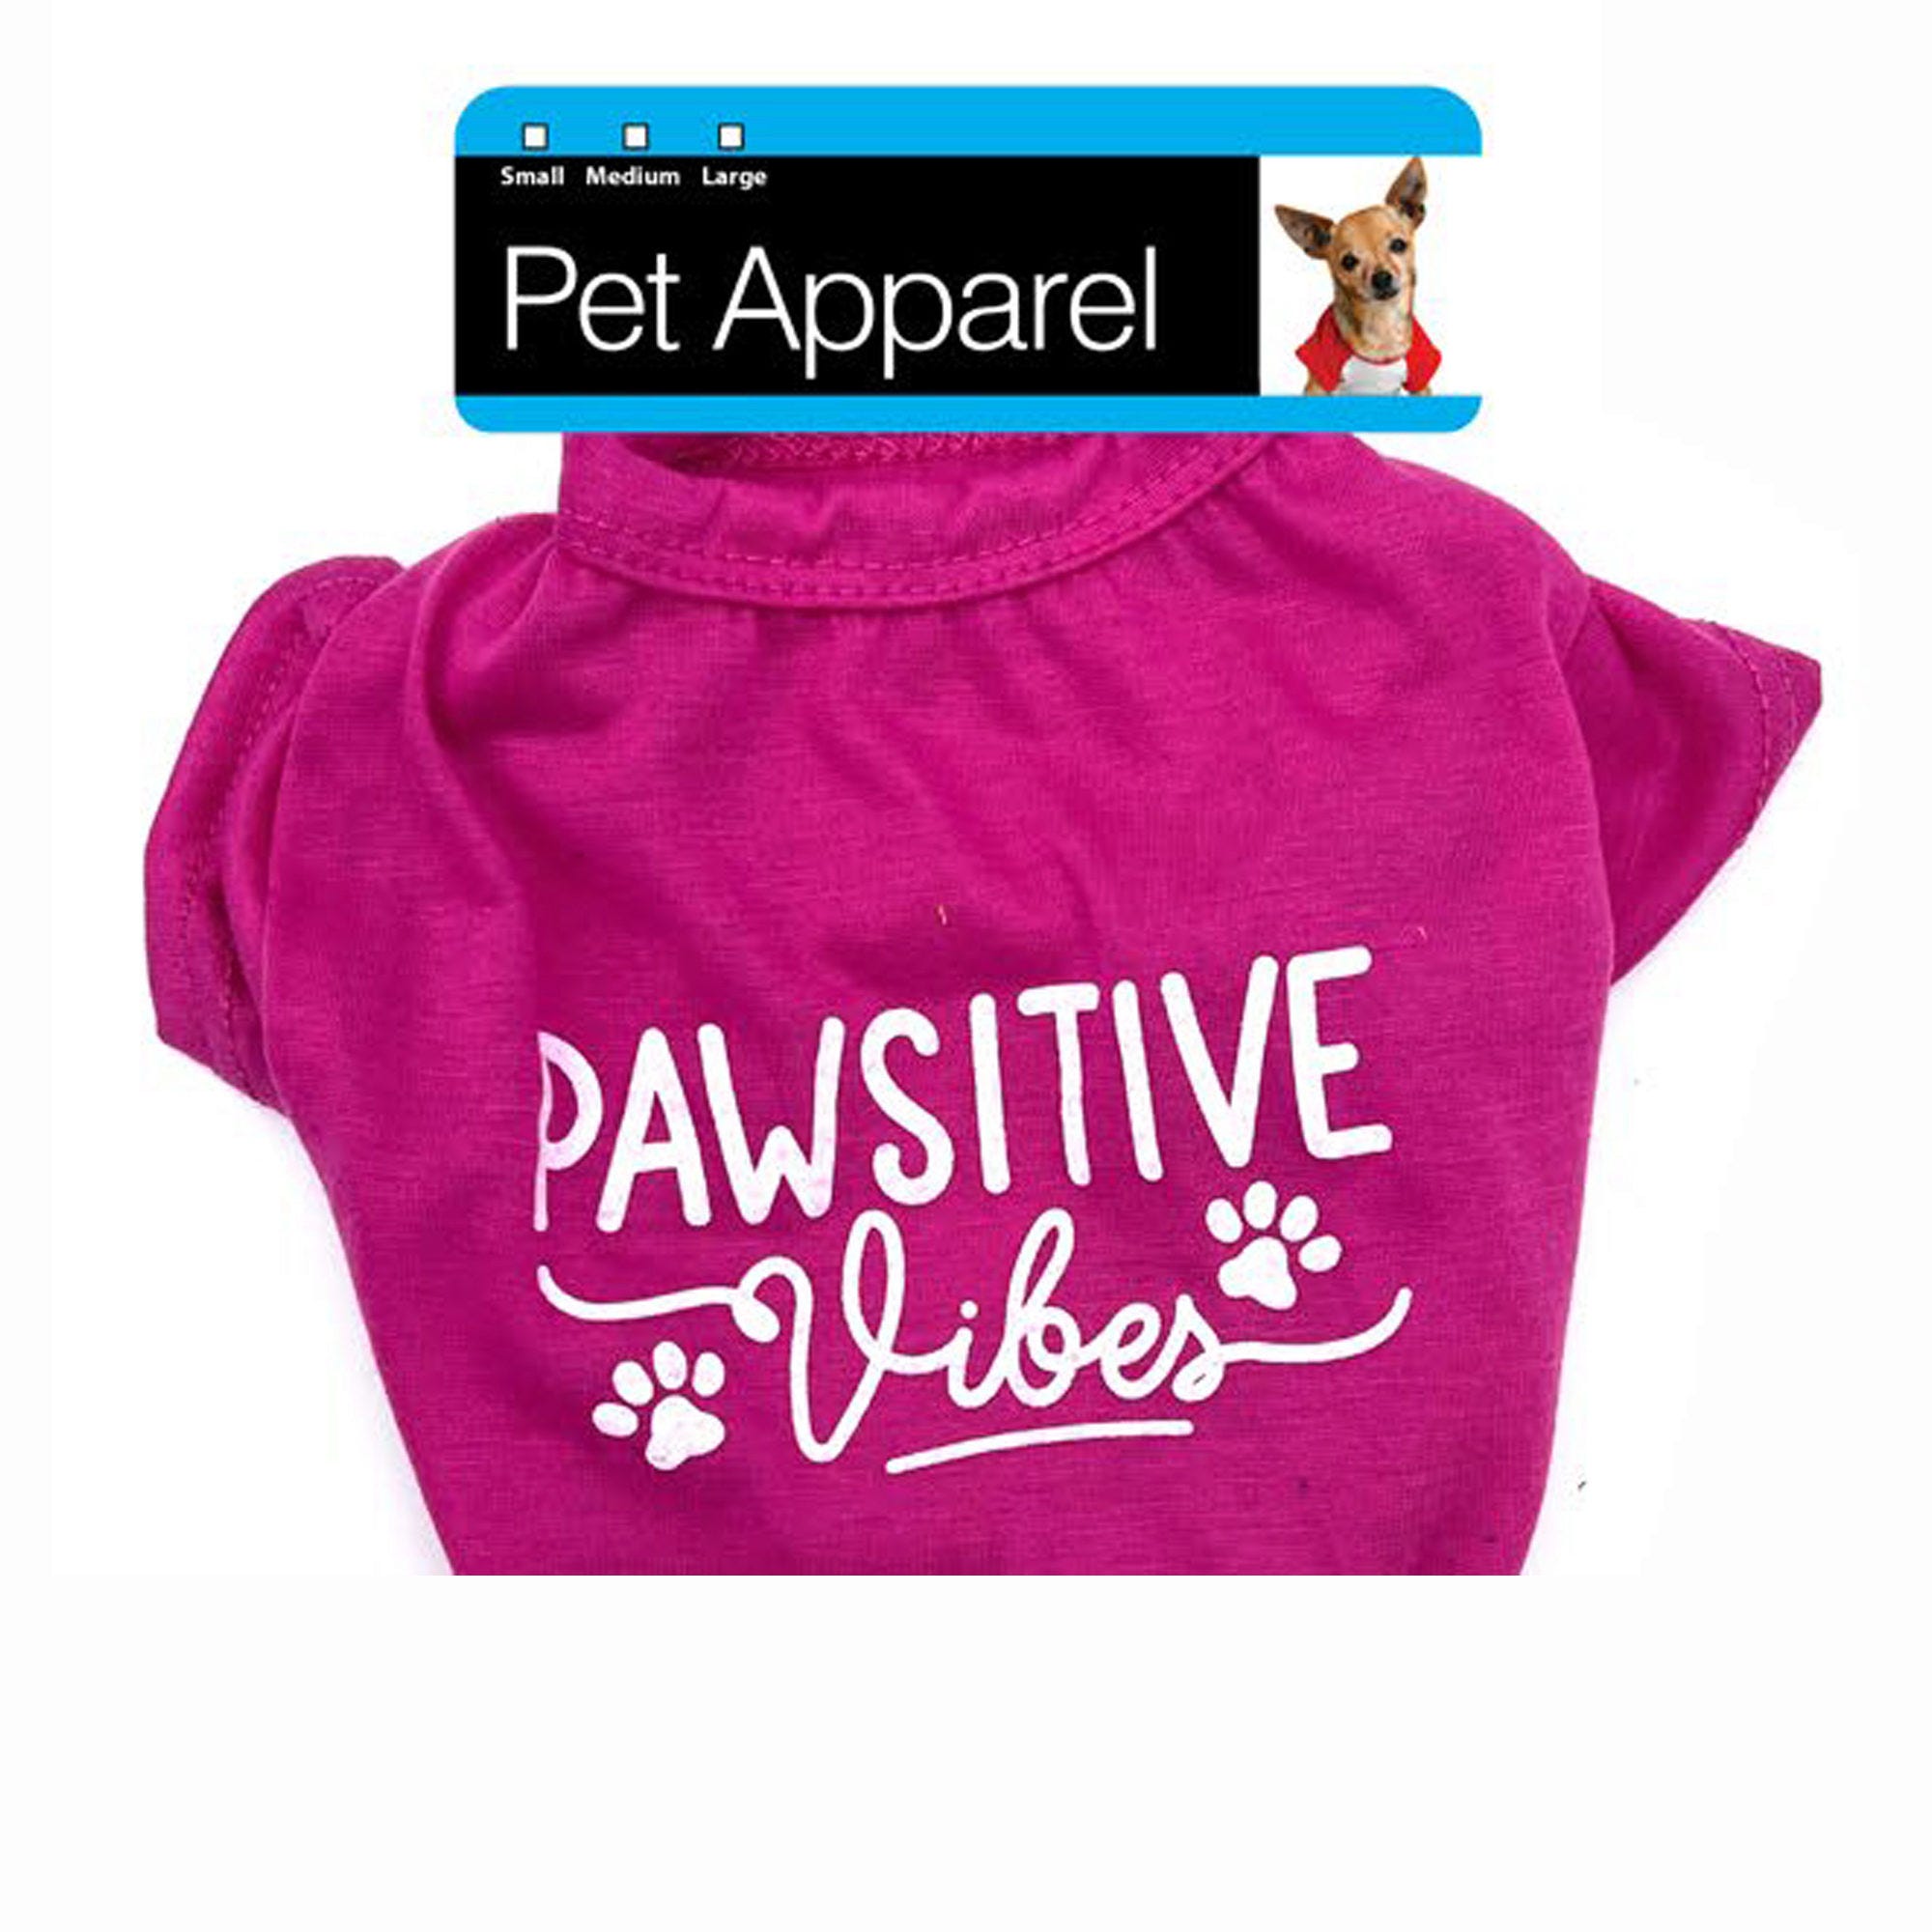 Pawsitive Vibes Cute Dog Pet T-SHIRT Clip Strip - Qty 12